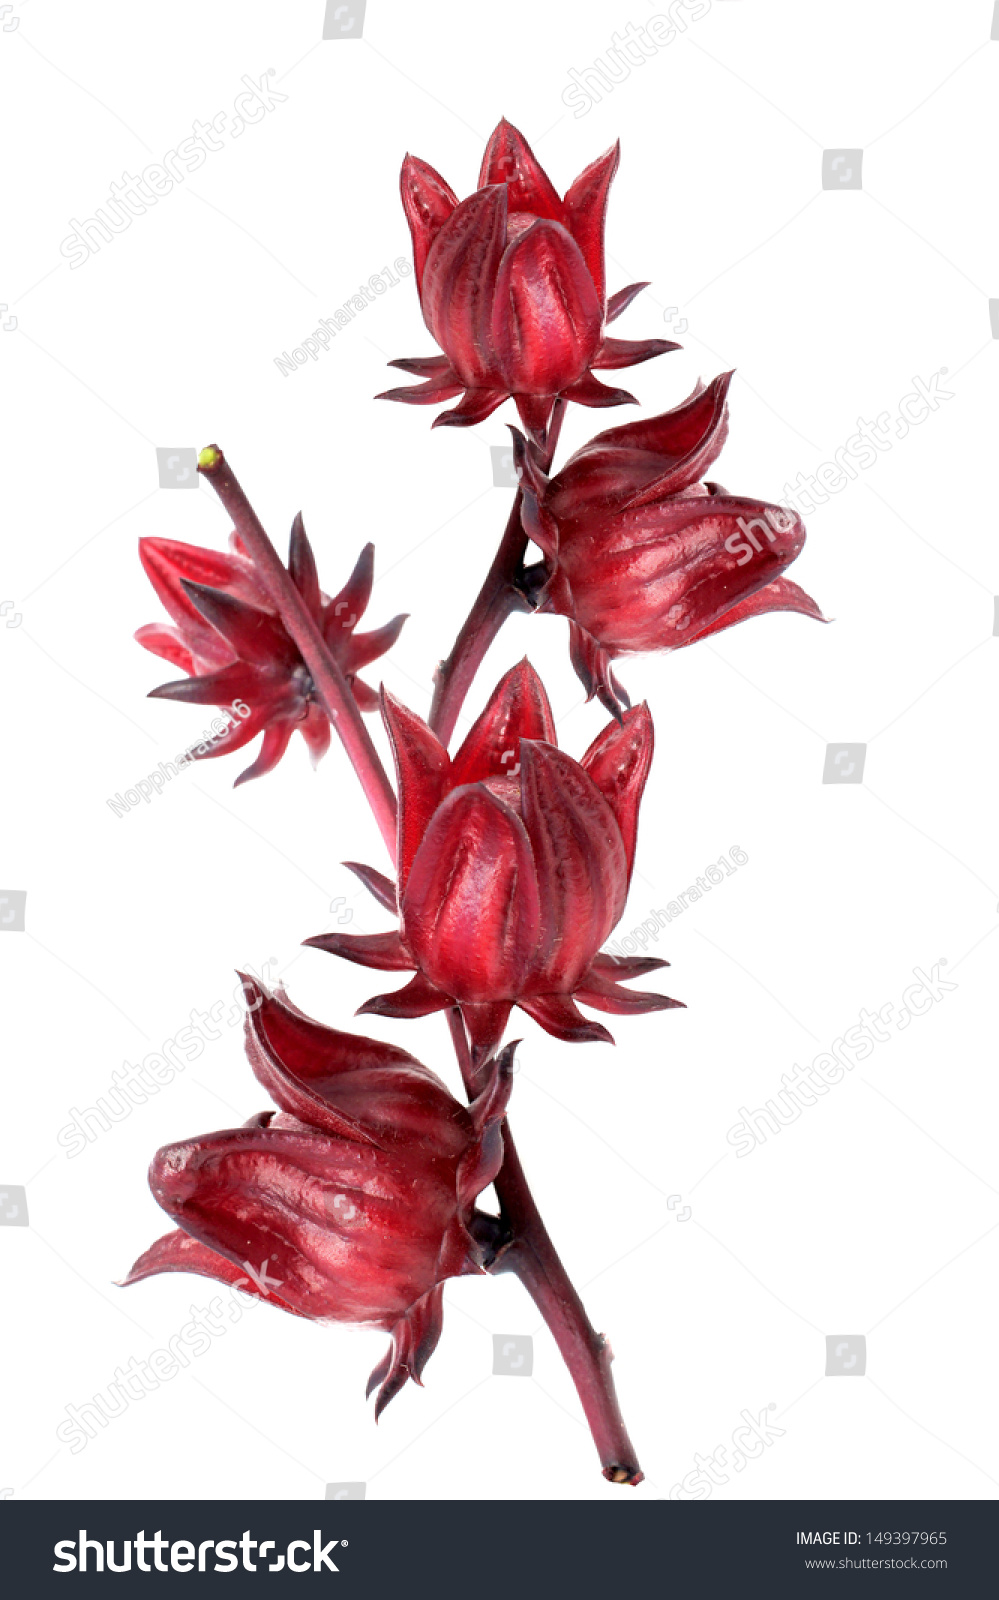 Hibiscus sabdariffa or roselle fruits #149397965